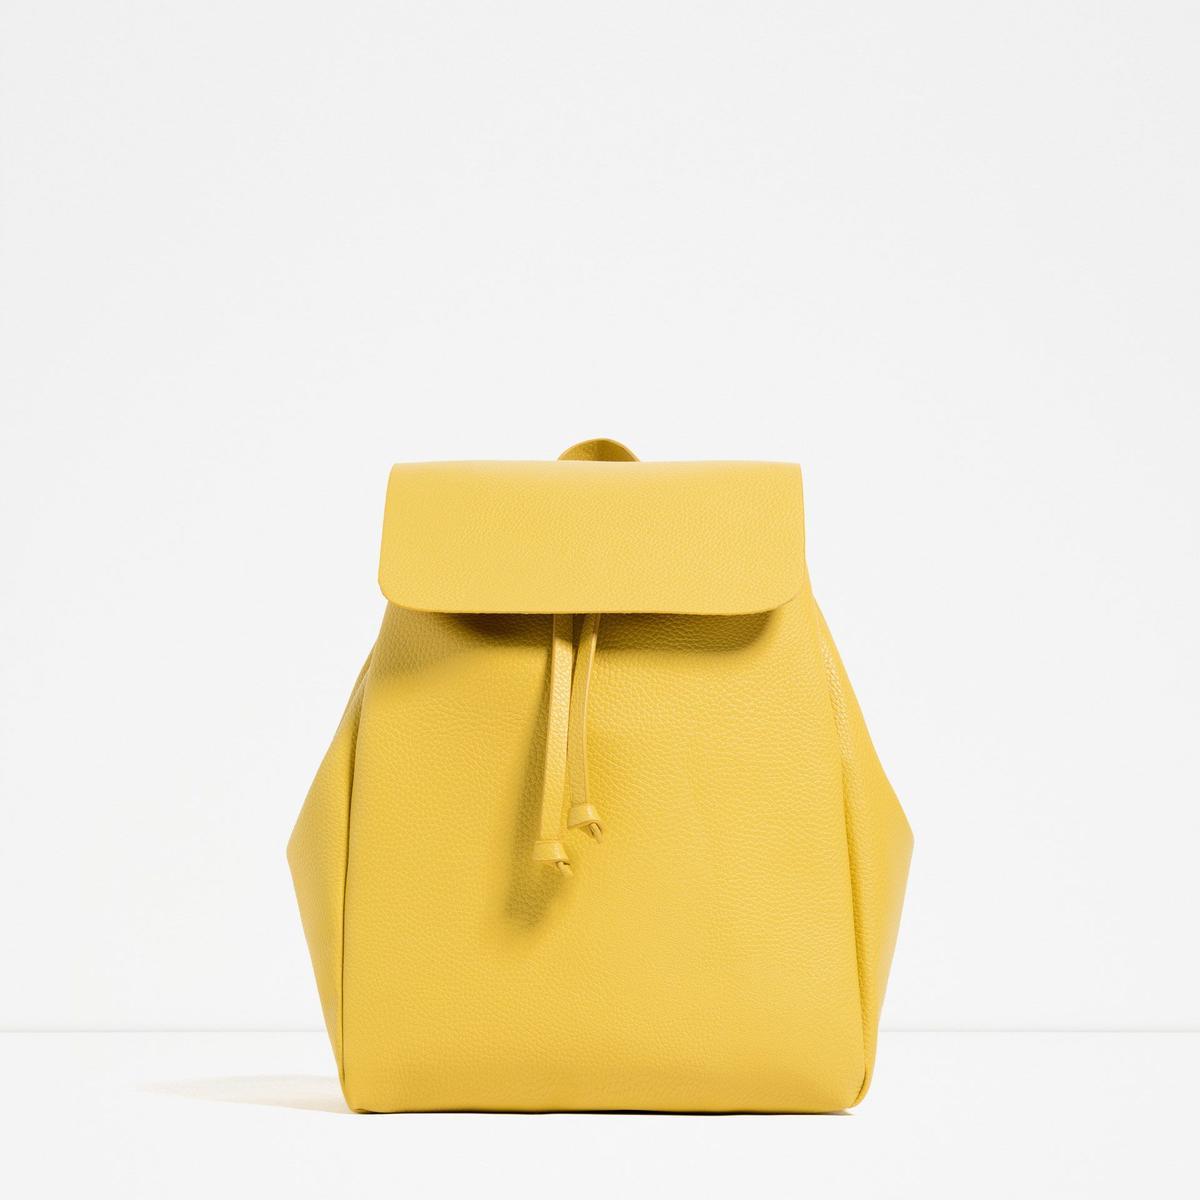 Alerta tendencia, mochila con solapa amarilla de Zara (19,95€)